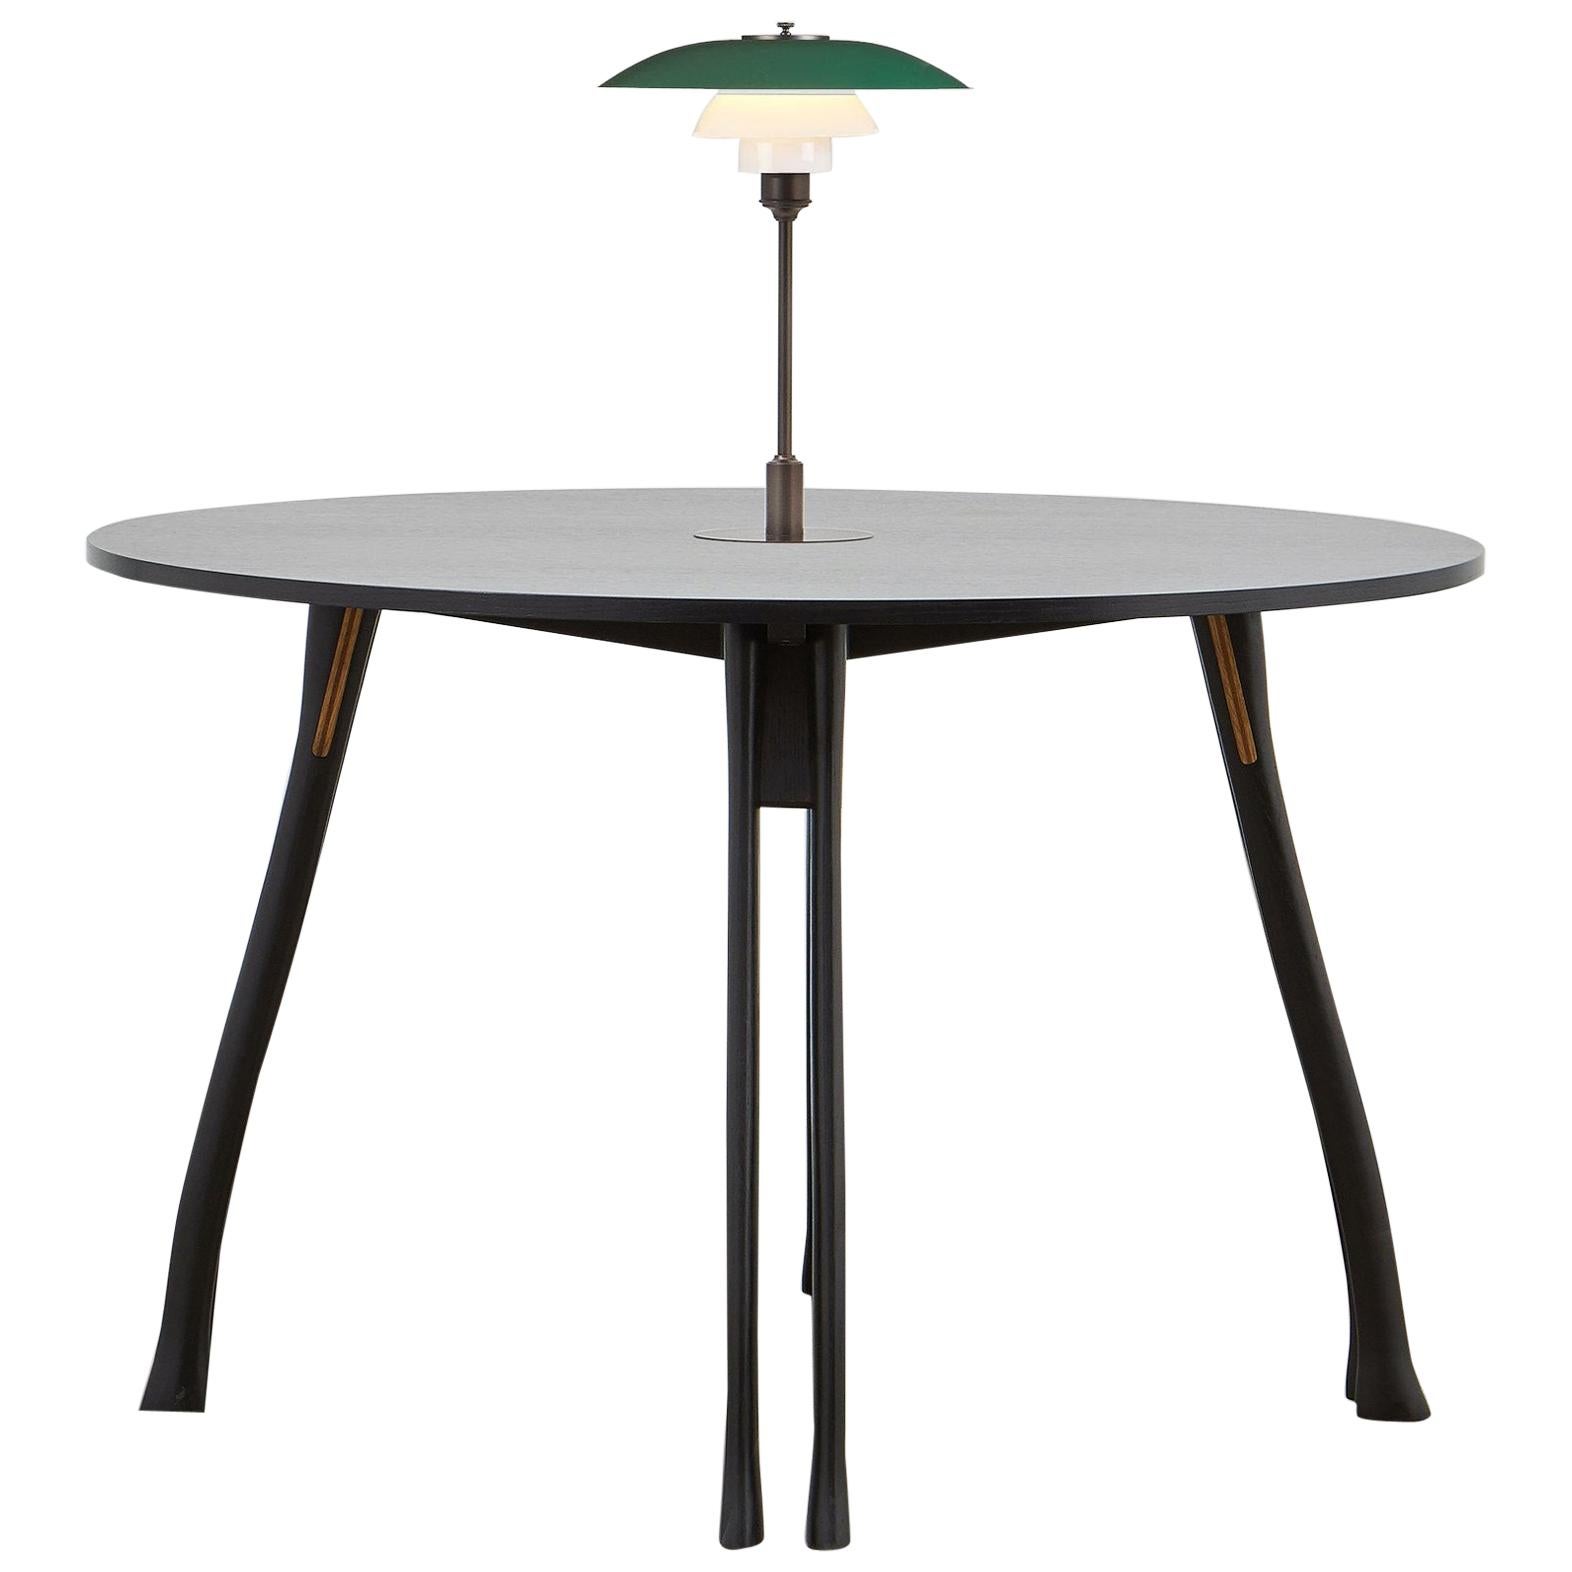 PH Axe Table, Black Oak Legs, Veneer Table Plate, Green PH Lamp For Sale